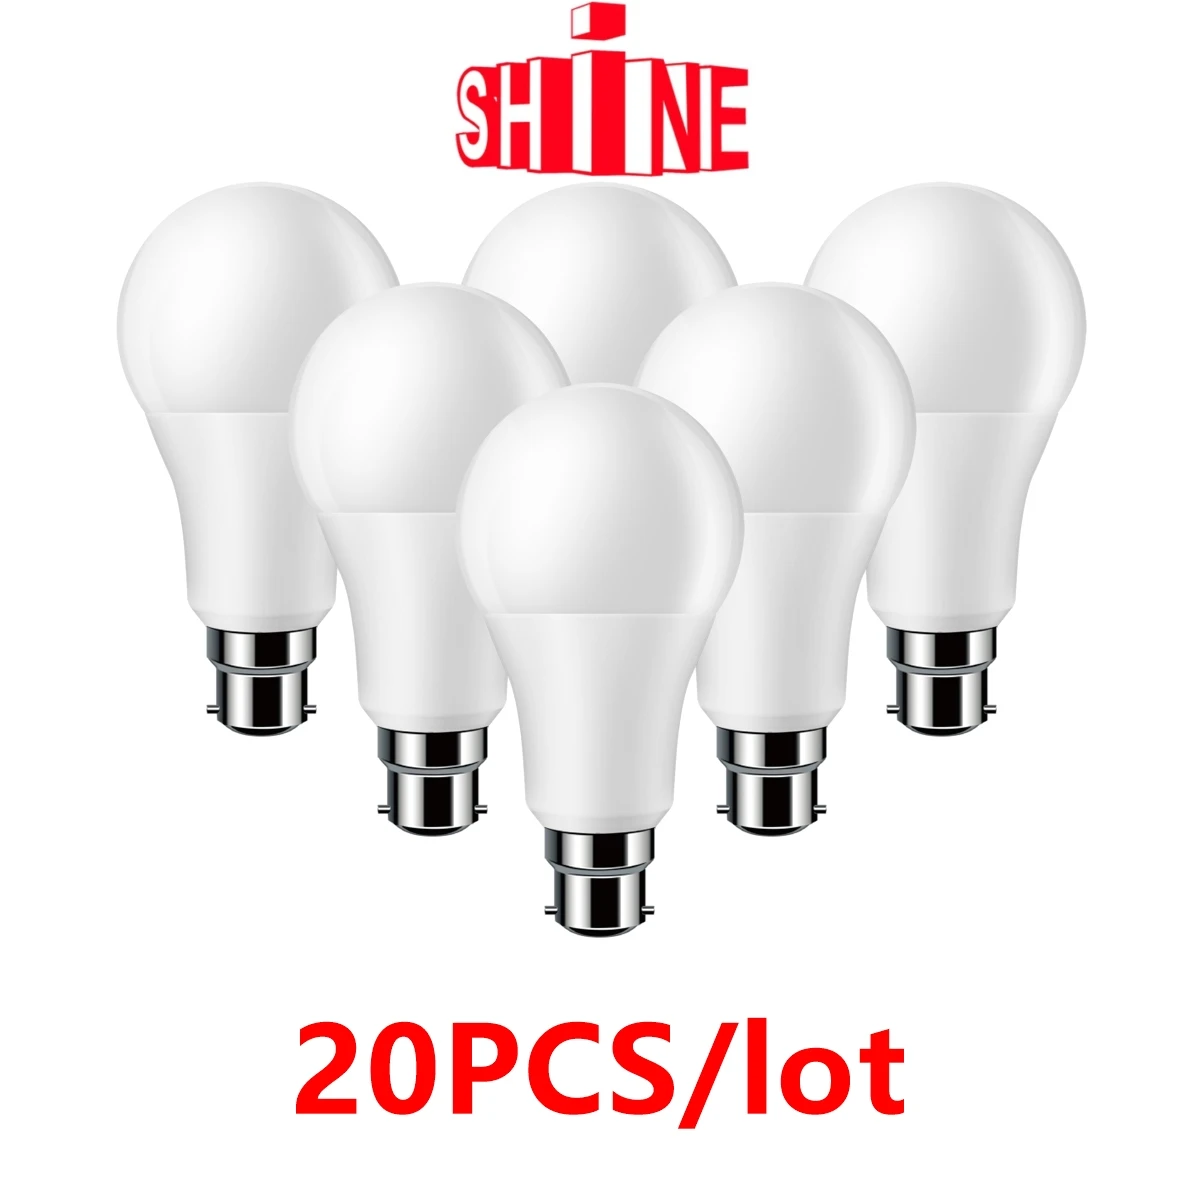 20PCS Factory direct LED bulb 220V high power 15W E27 B22 high lumen no strobe suitable for children's room study kitchen